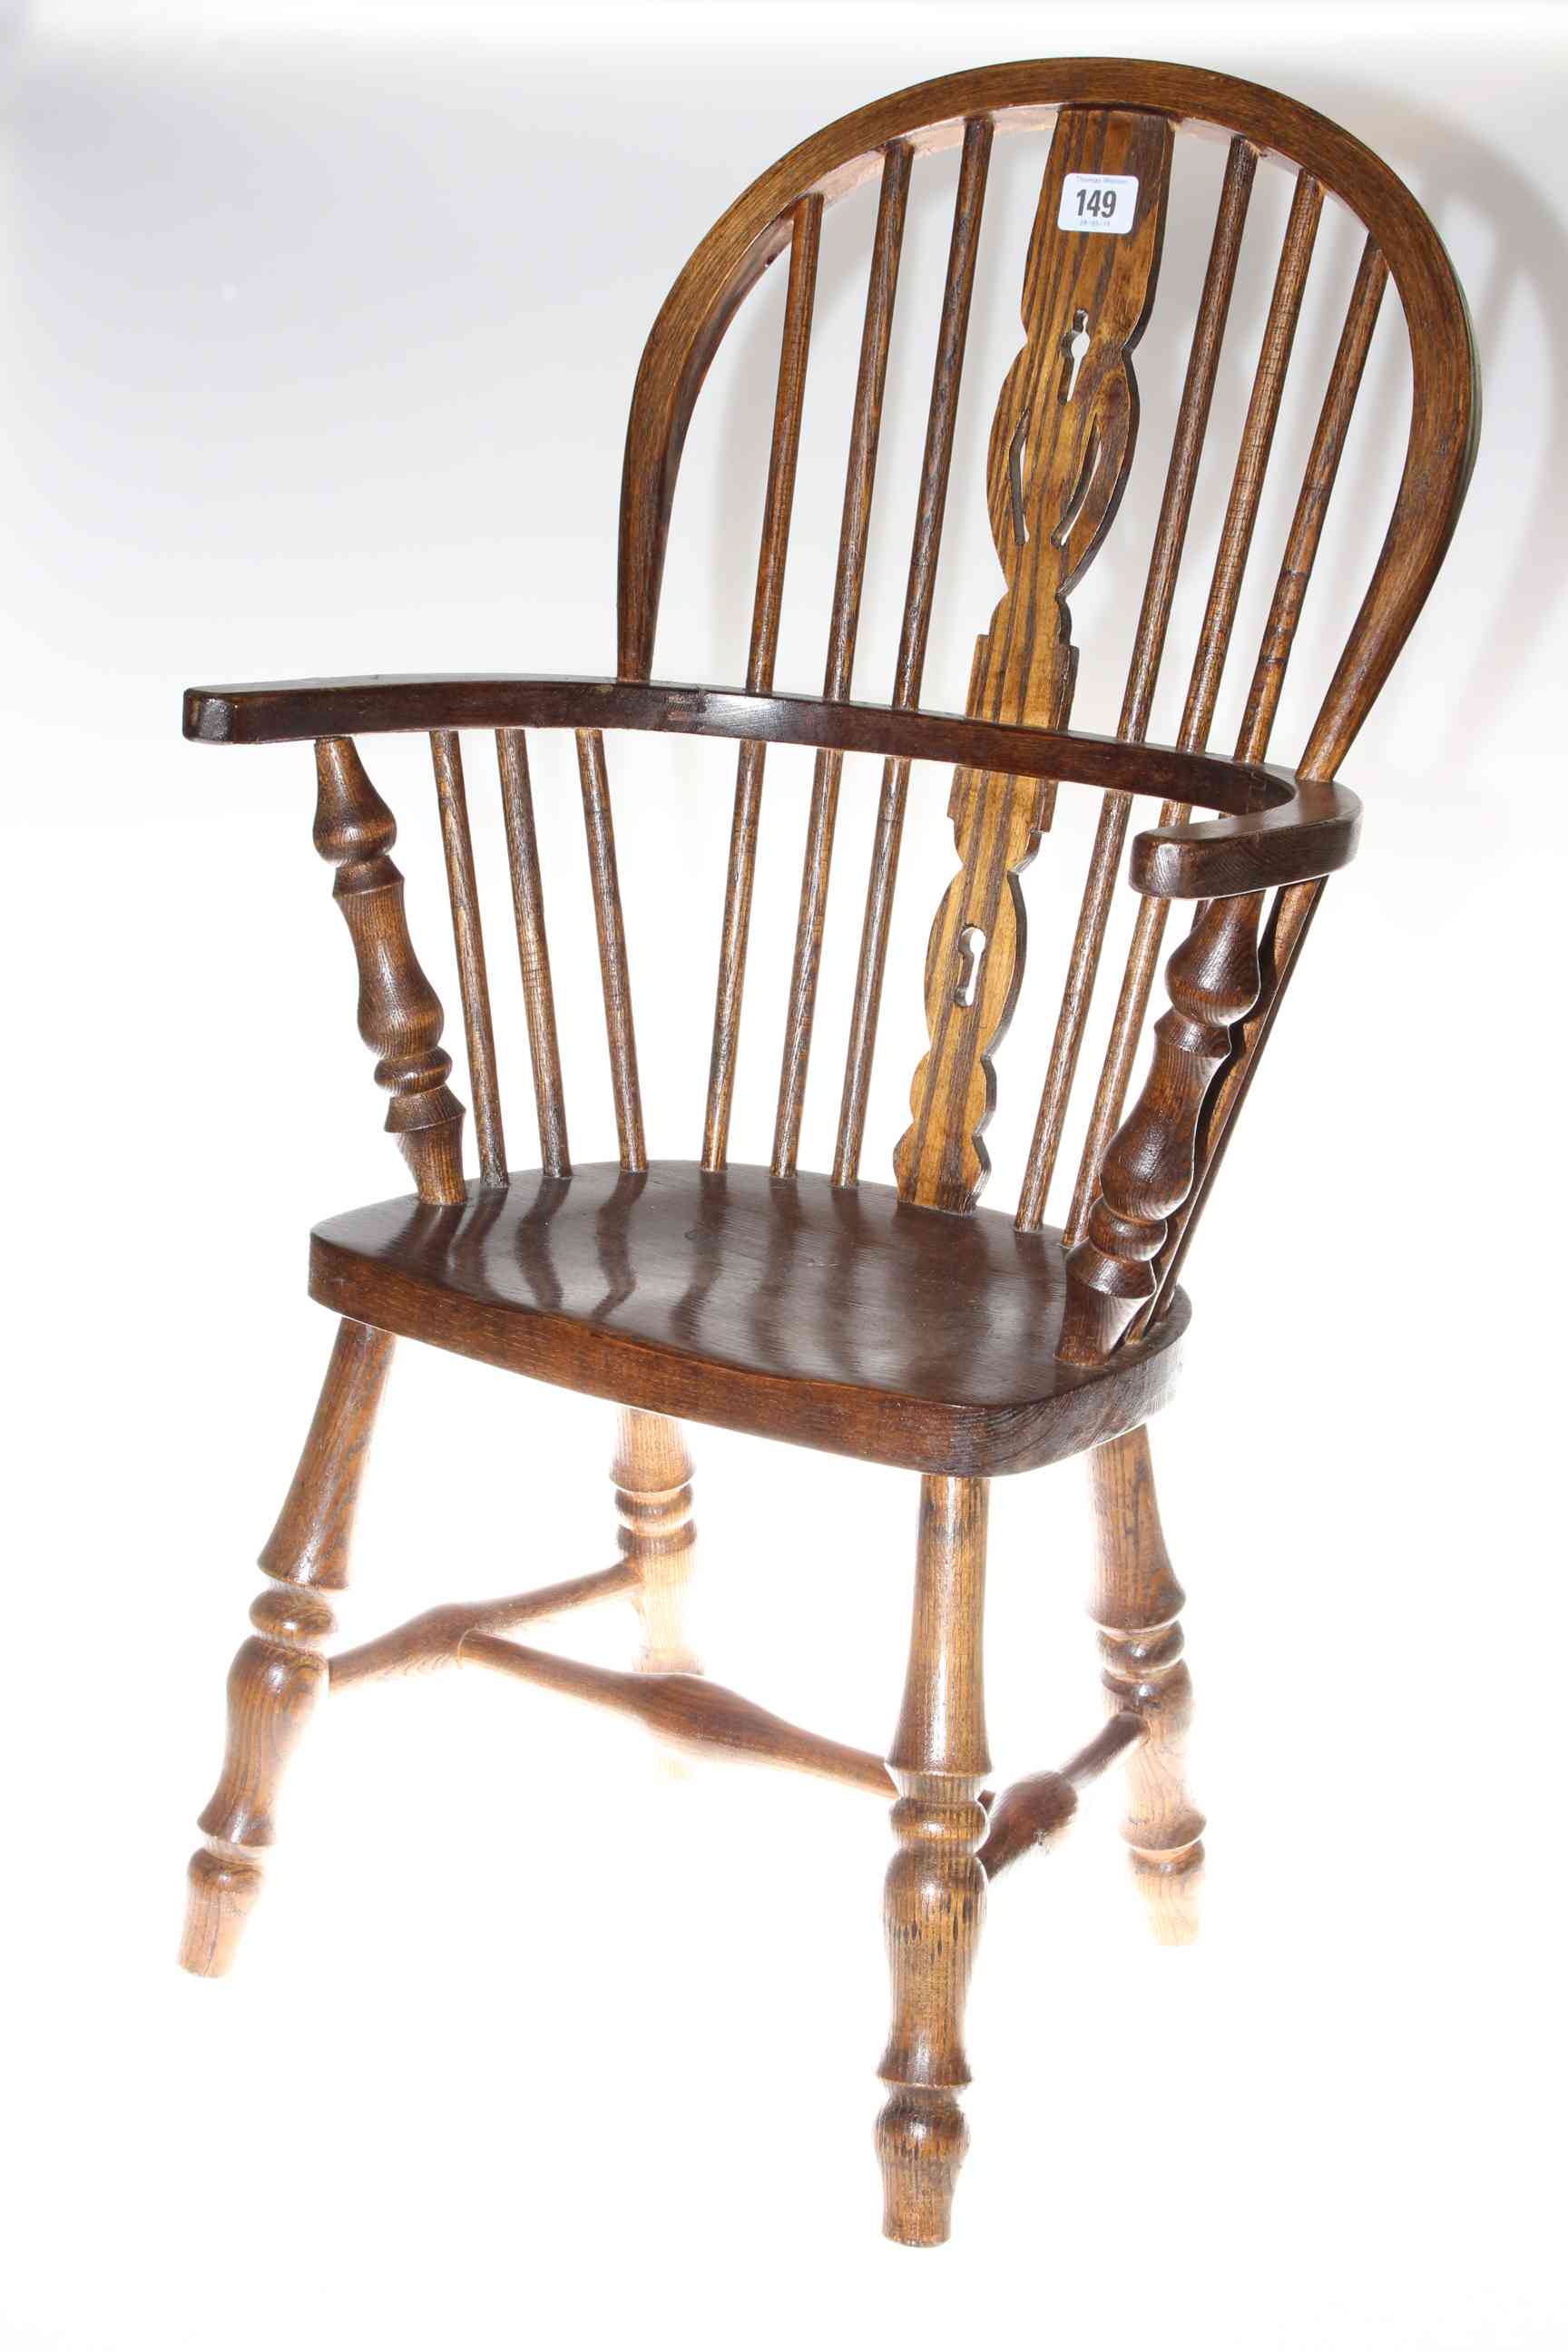 Child's Windsor chair, 73cm.